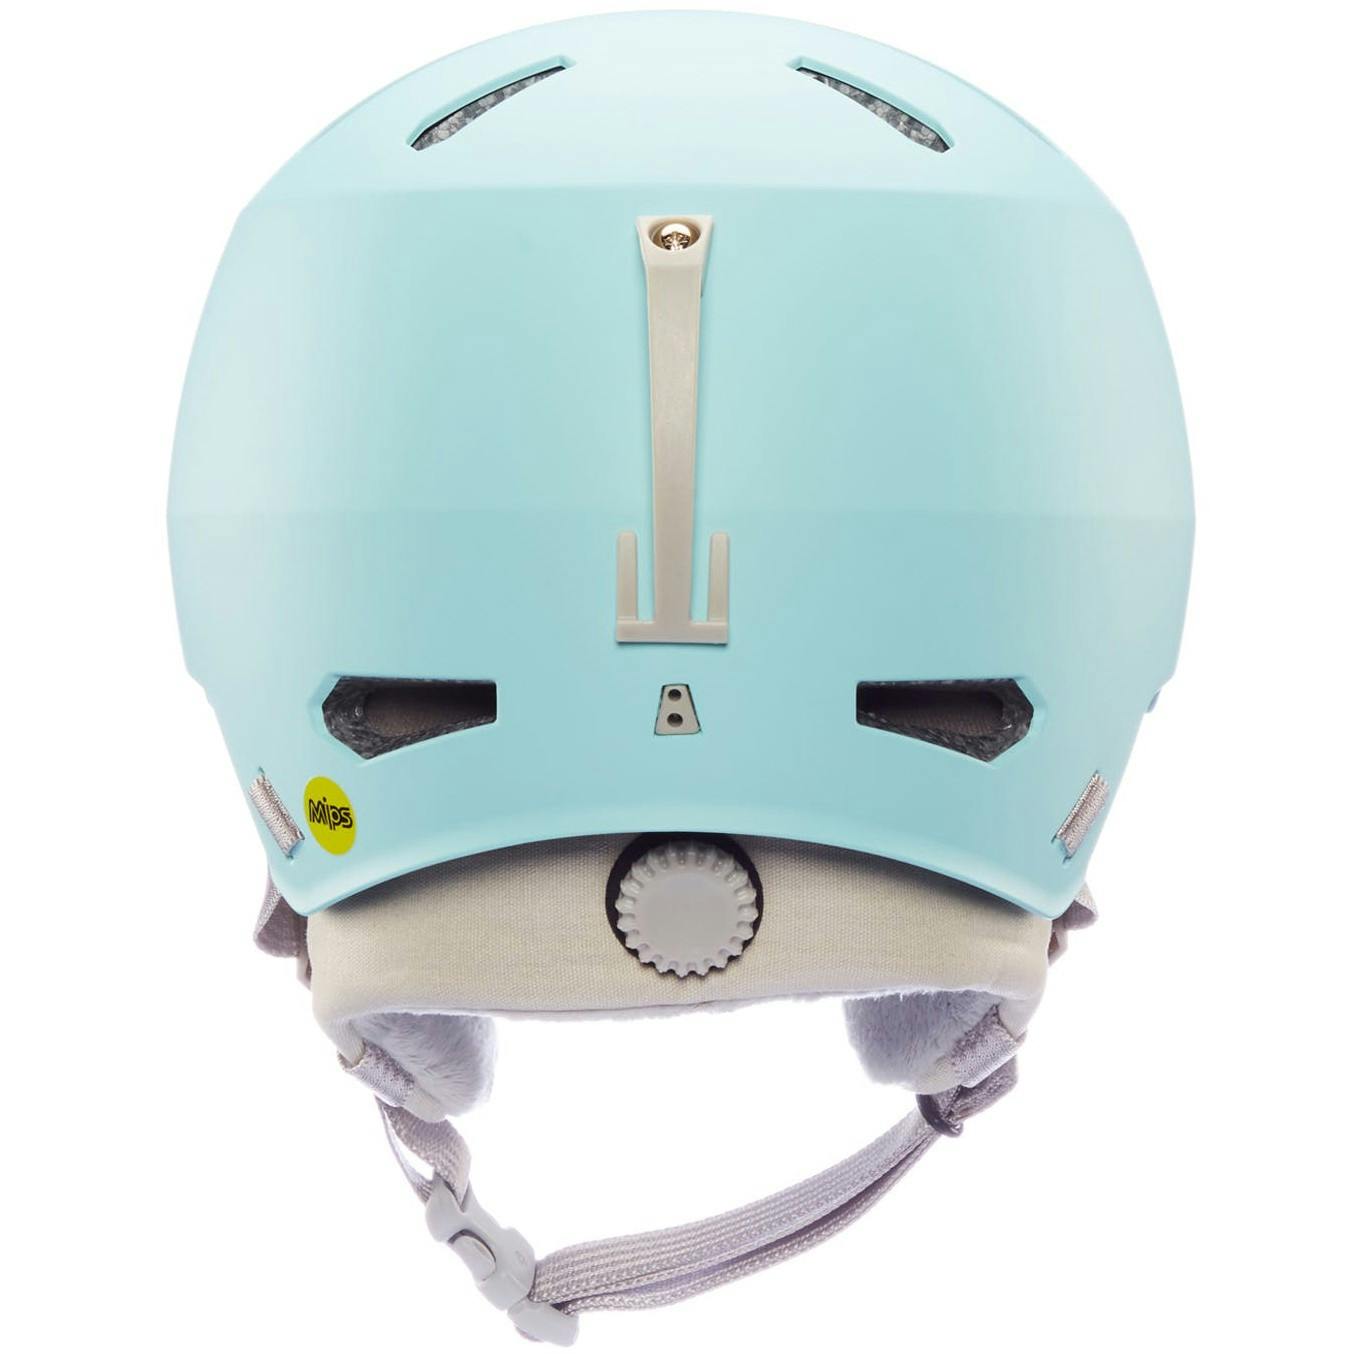 Bern Macon 2.0 MIPS Helmet